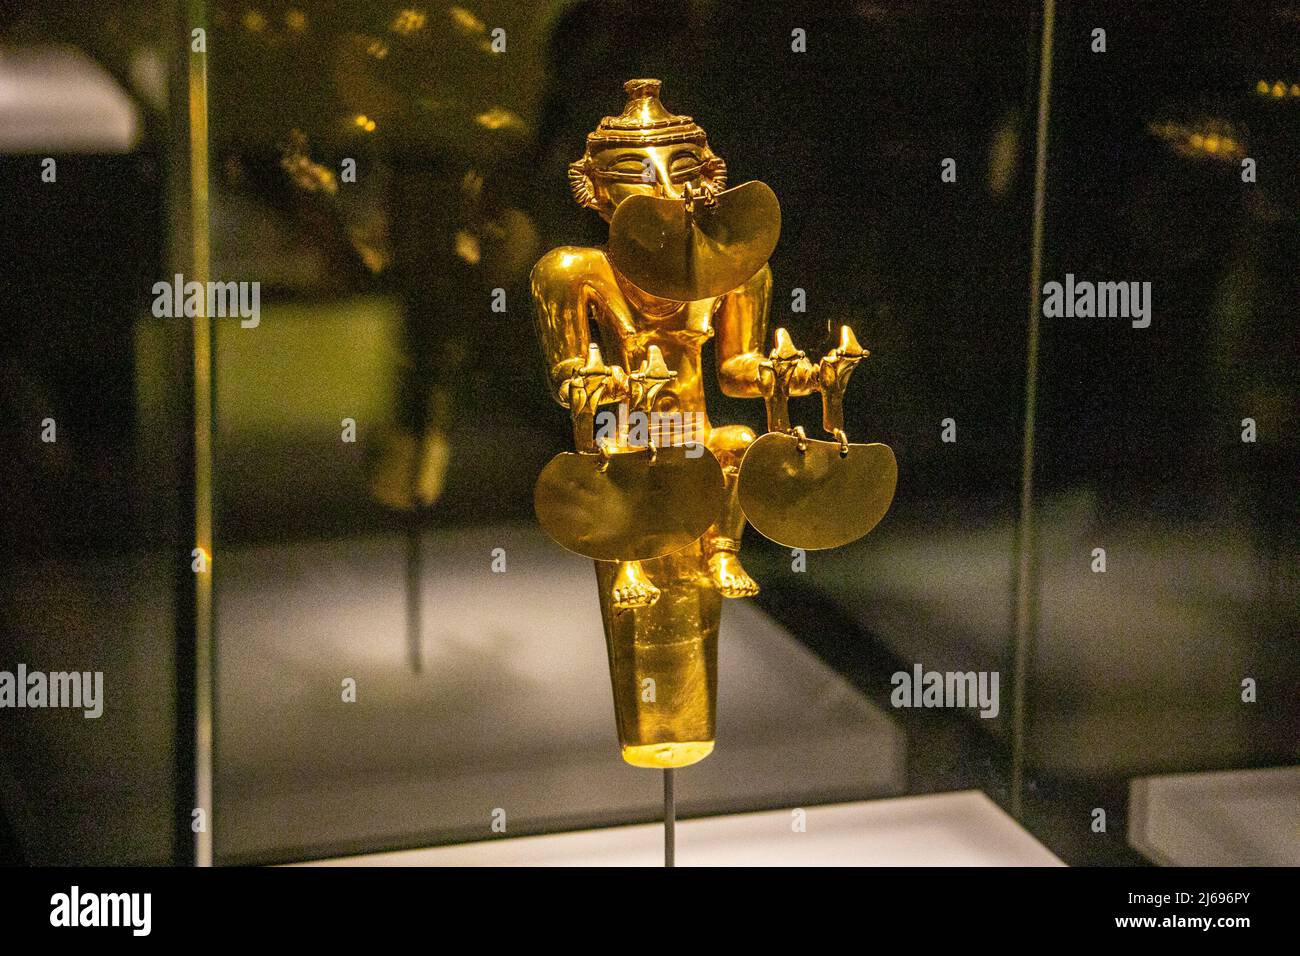 Goldkalkbehälter in Form eines weiblichen Häuptans, Museo del Oro, Bogotá, Kolumbien, Museo del Oro, Bogotá, Kolumbien Stockfoto